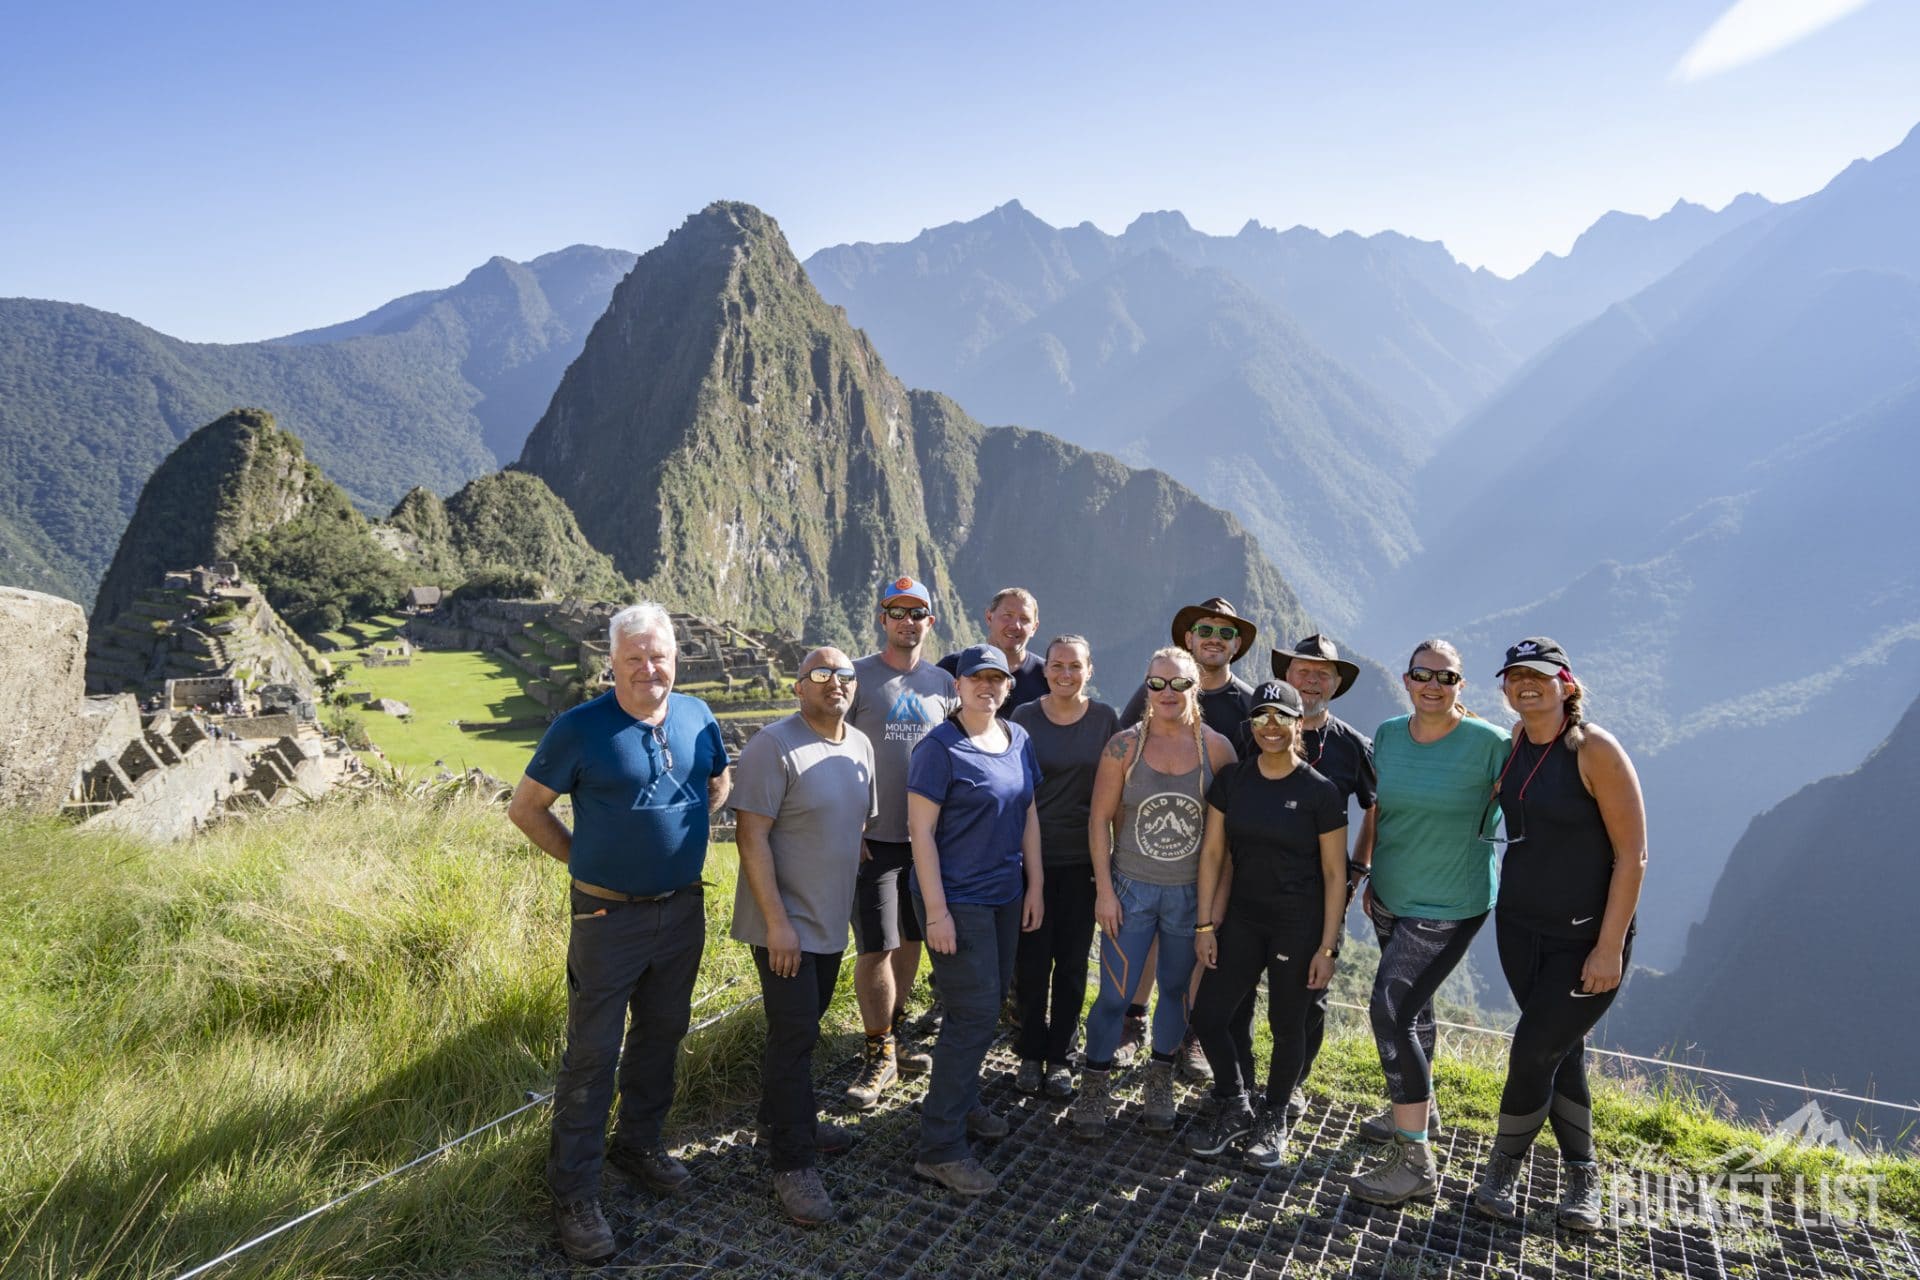 Bucketlisters on the Inca Trail trek to Machu Picchu